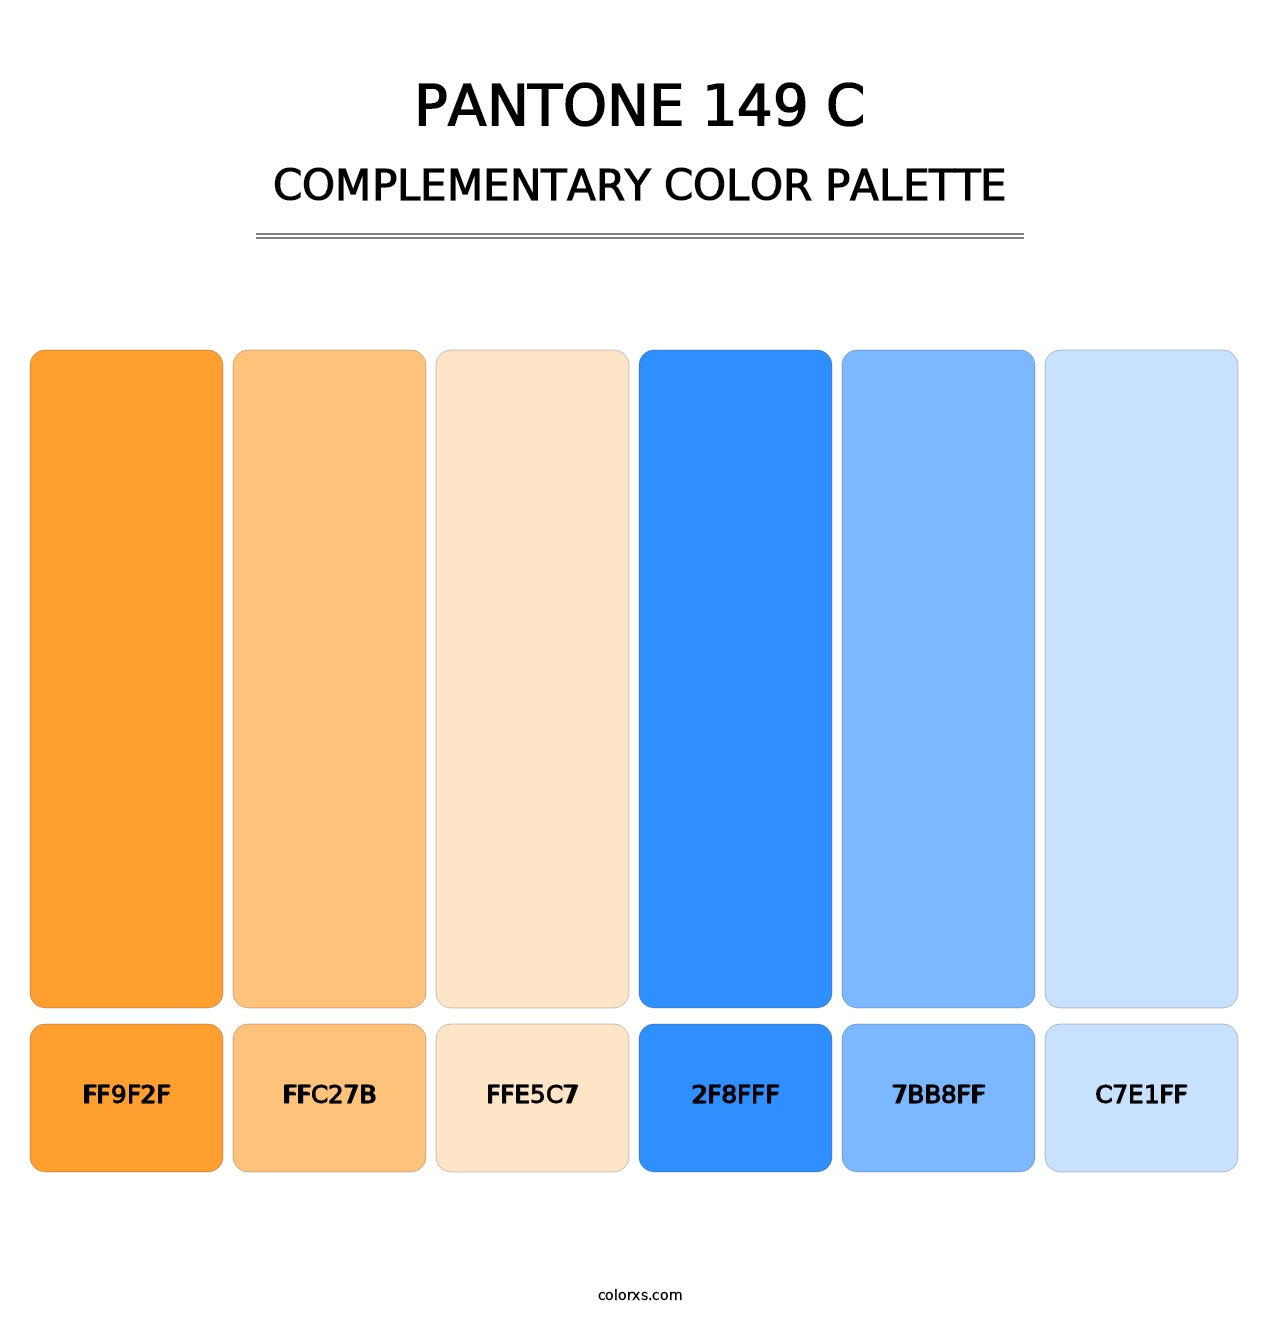 PANTONE 149 C - Complementary Color Palette